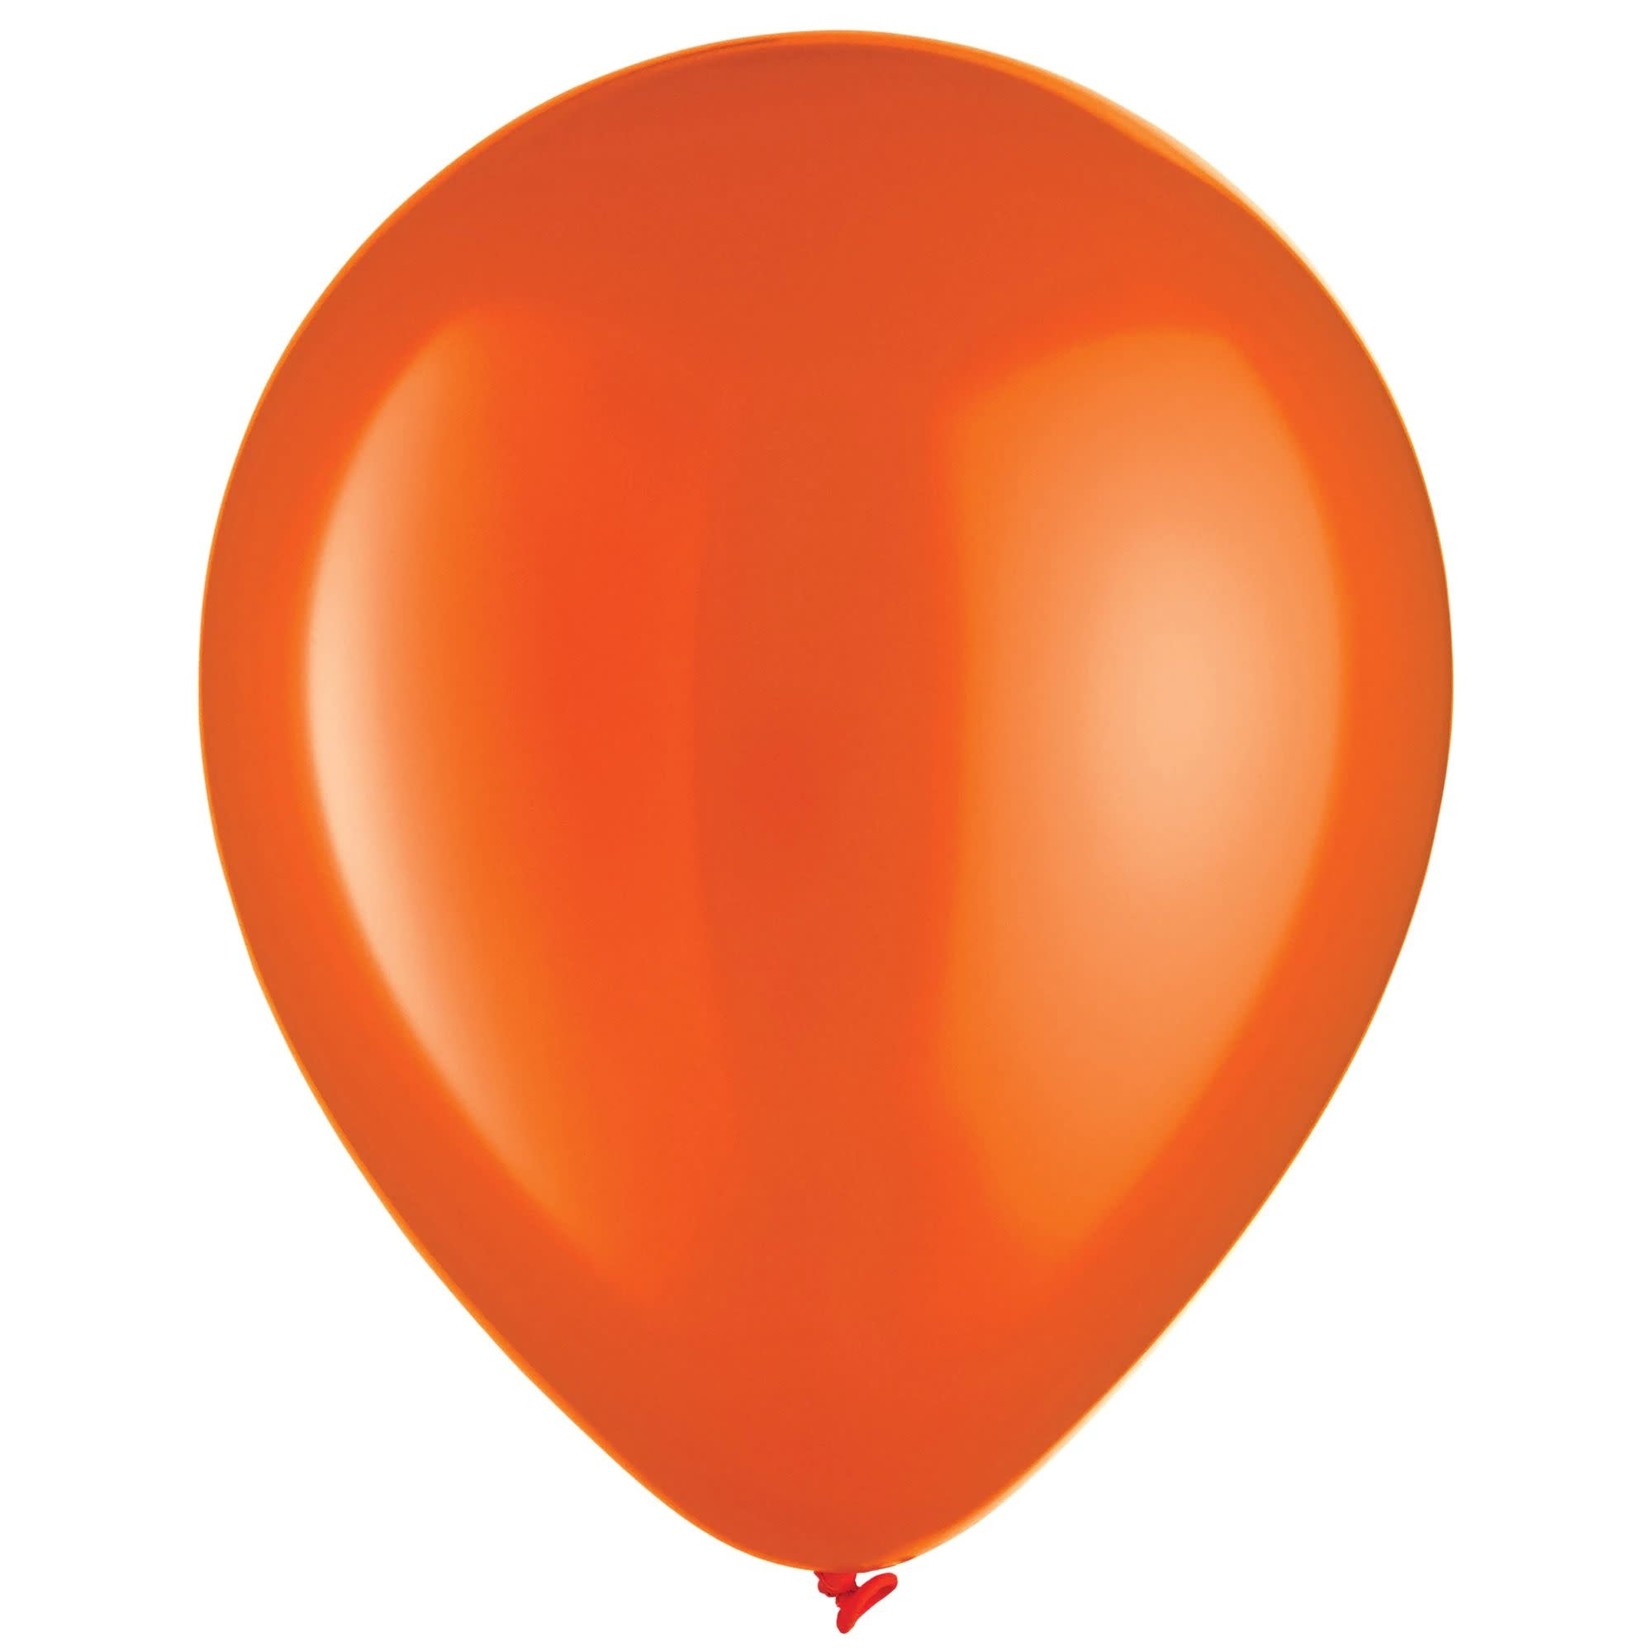 Pearlized Latex Balloons - Orange Peel